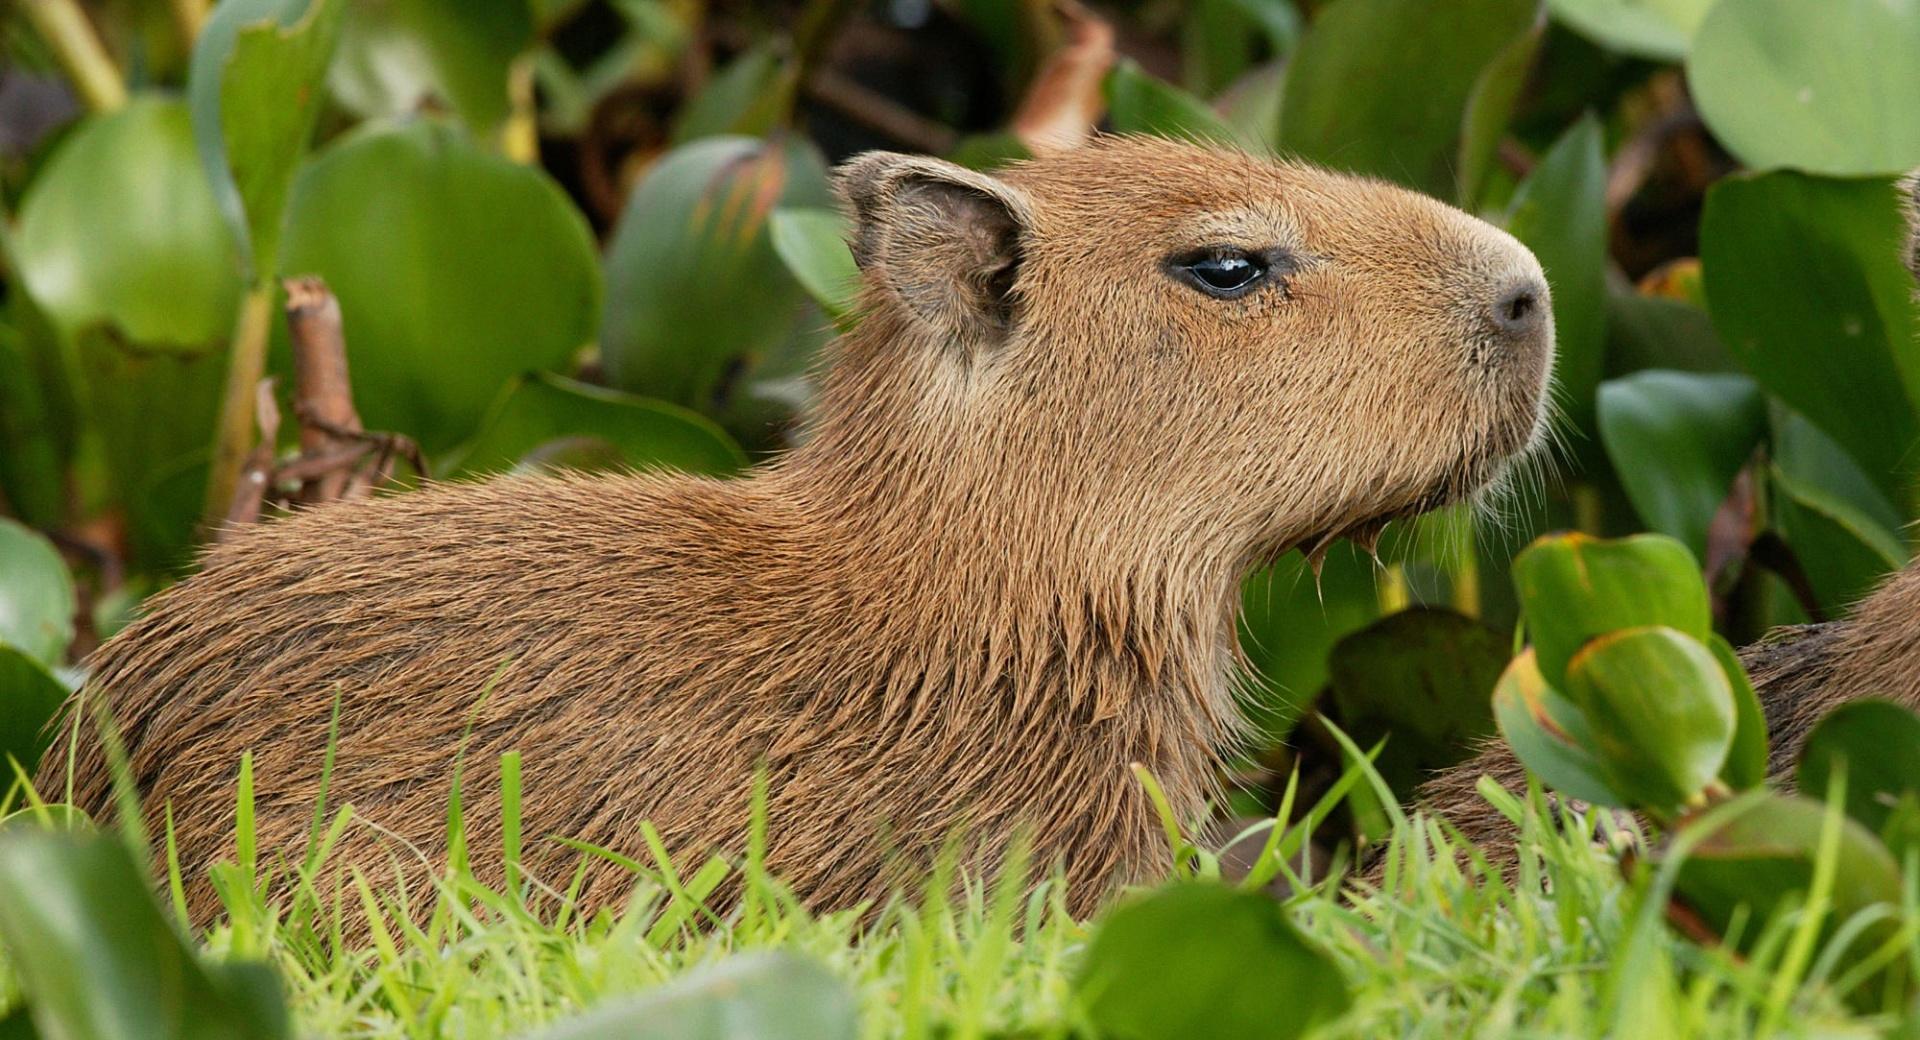 Capybara Venezuela at 1280 x 960 size wallpapers HD quality